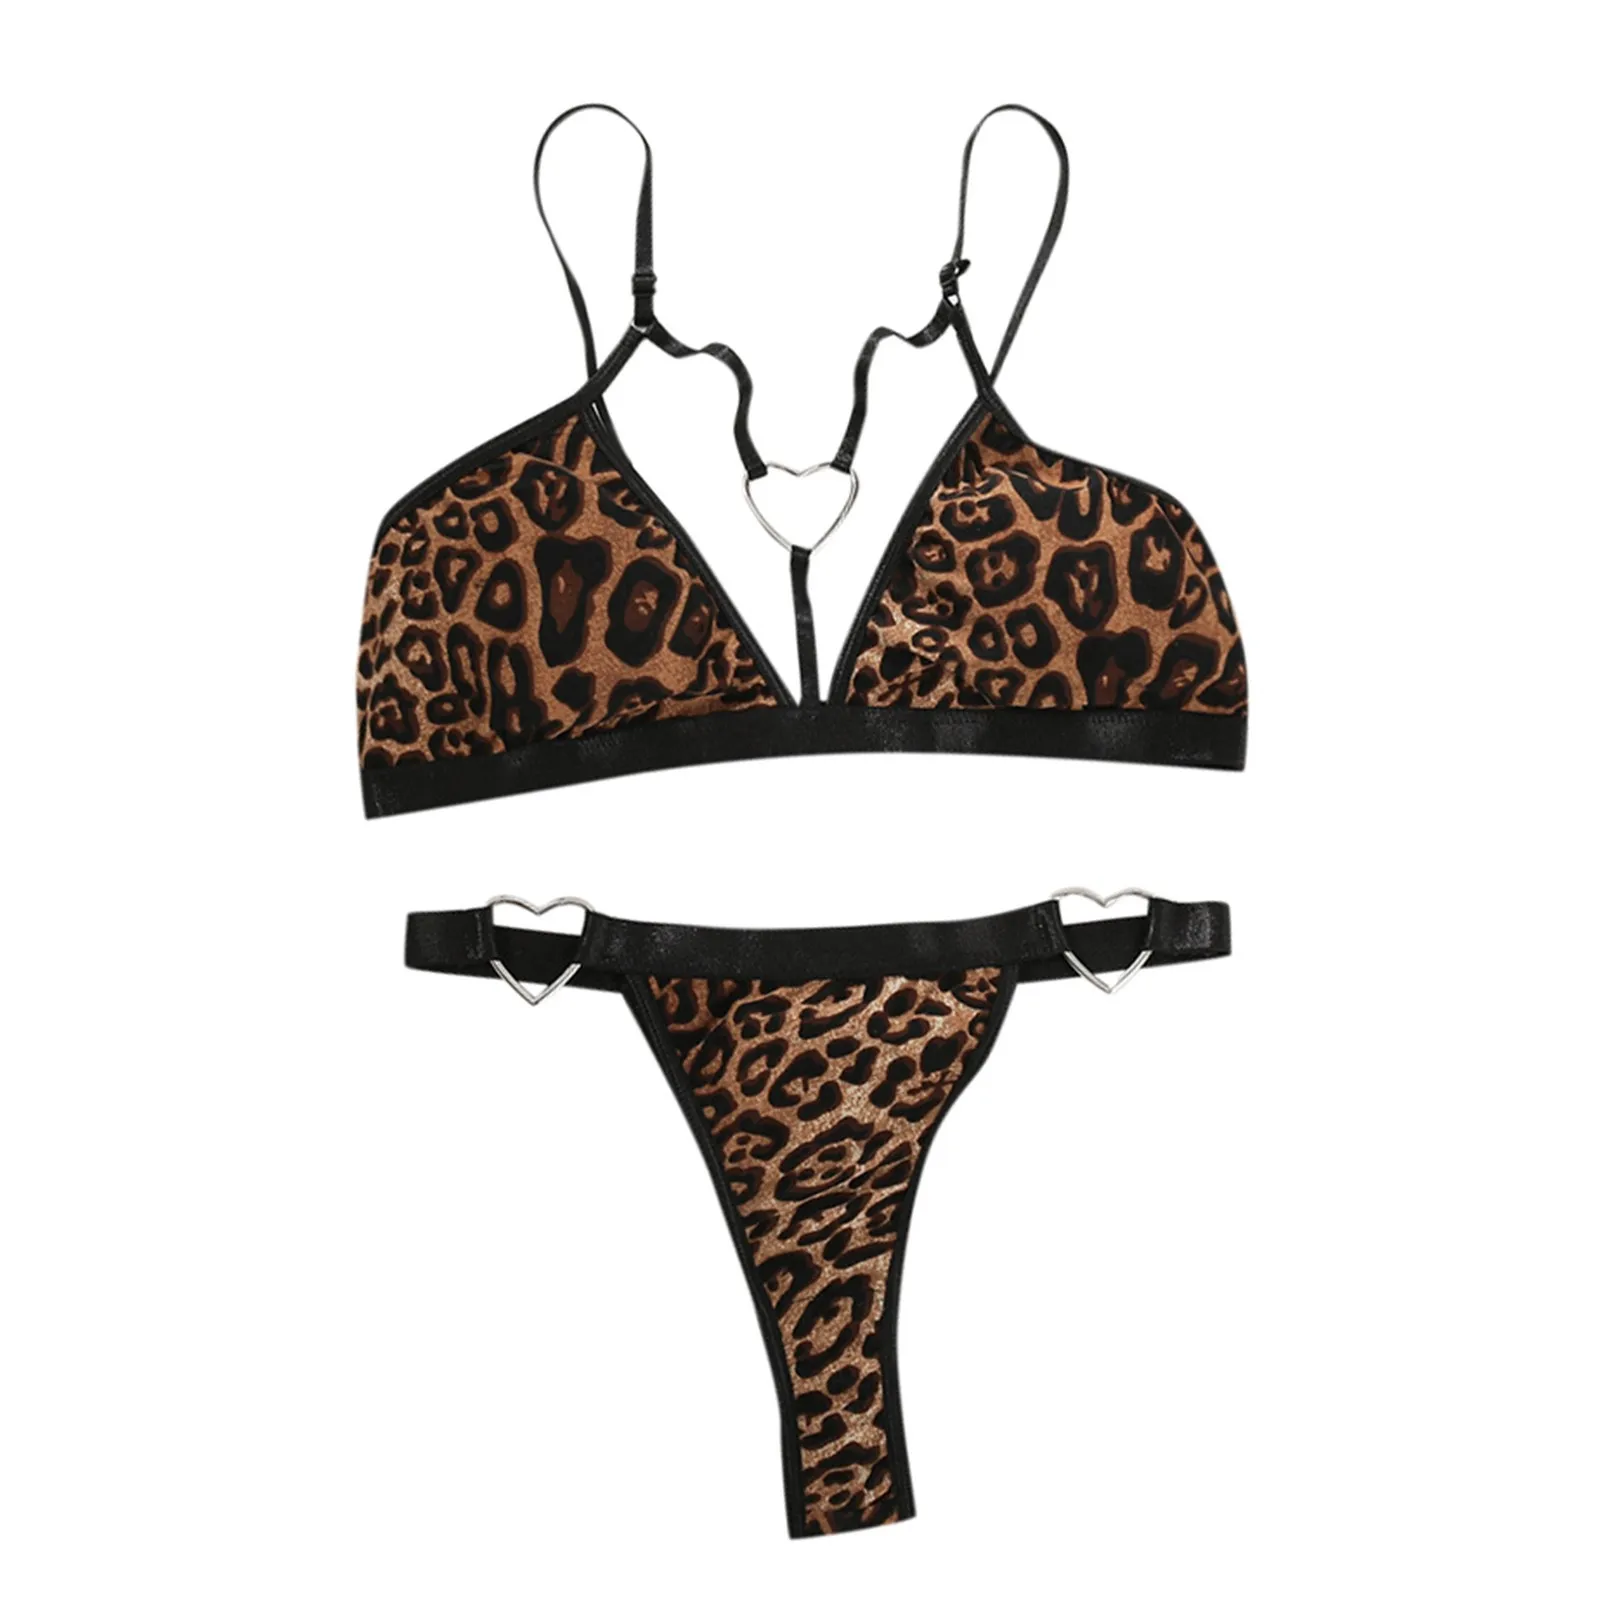 bra sets Sexy Lingerie Leopard Printed Bras Set Women Bralette Bras + G-string Thong Panties Sets Babydoll Underwear Sleepwear Nightwear bra sets